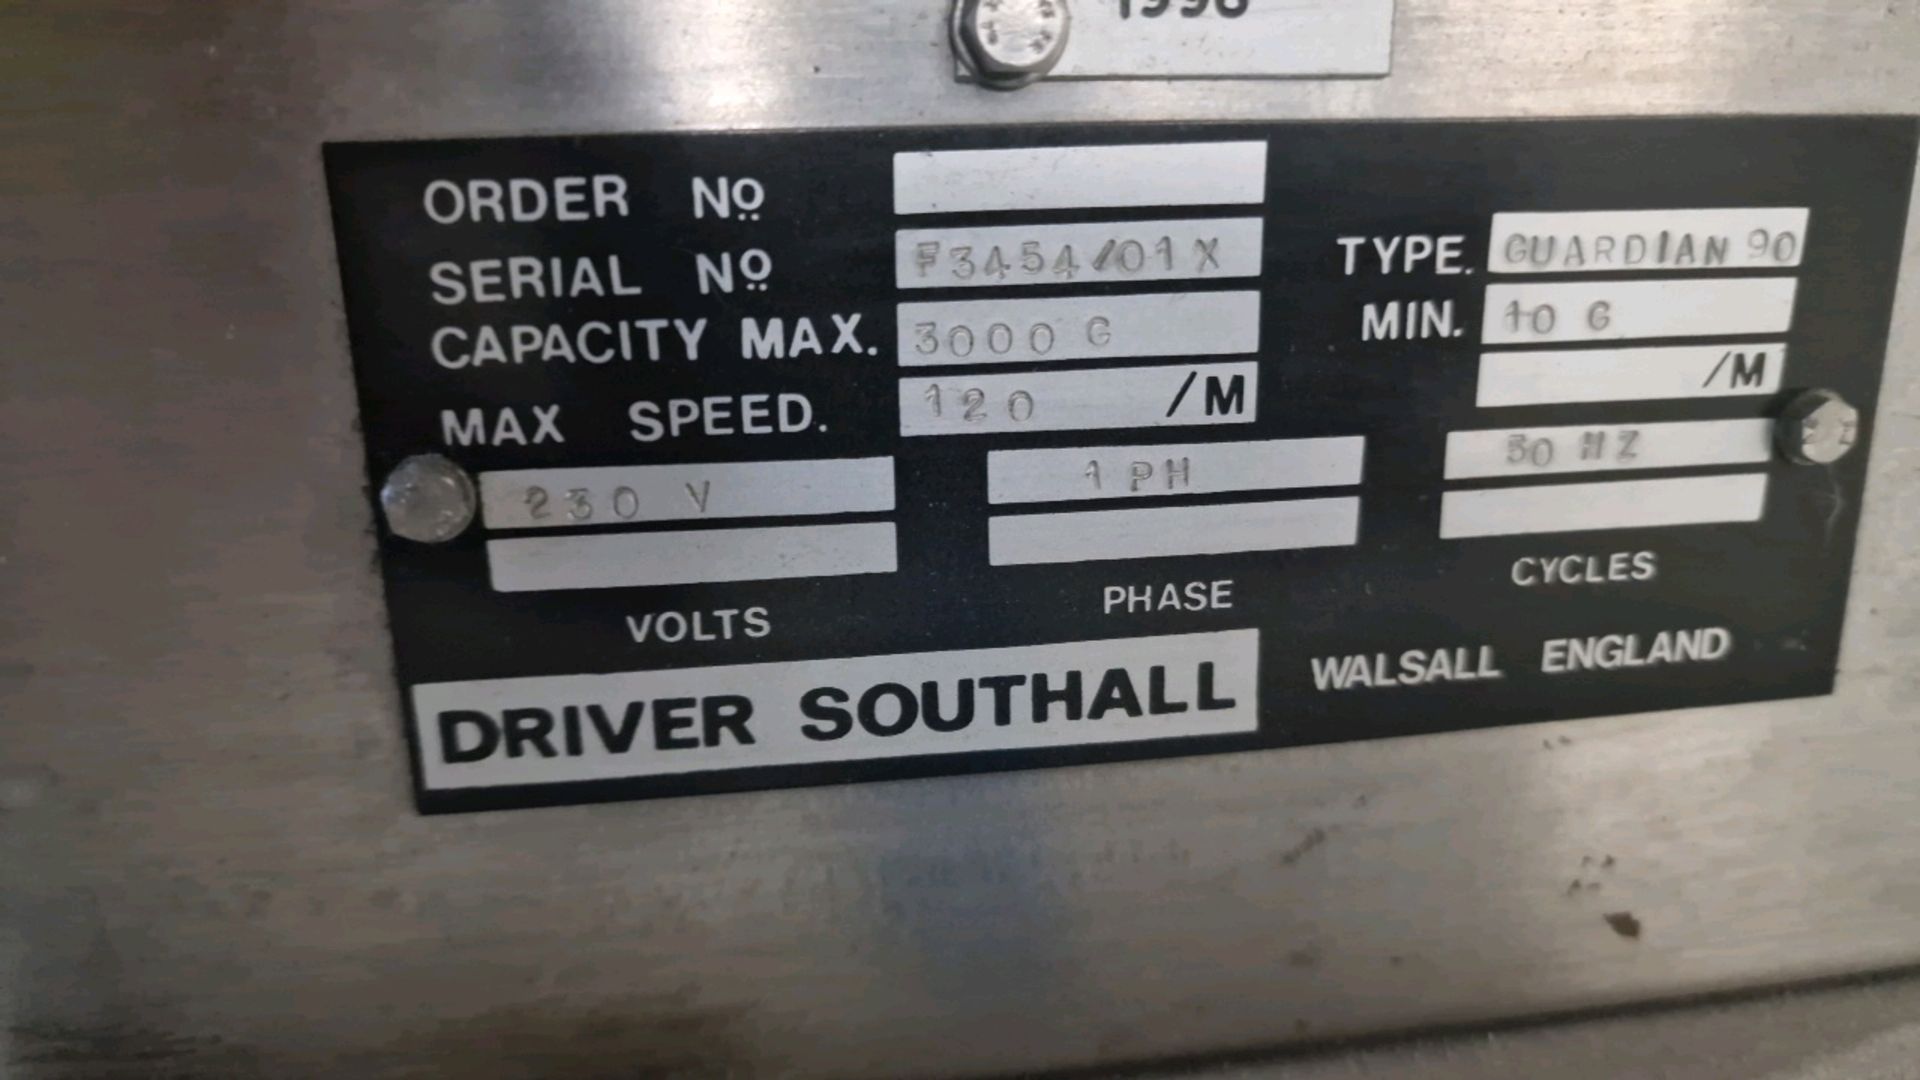 Driver Southall Guardian 90 Check Max Weight 3000g - Bild 5 aus 6